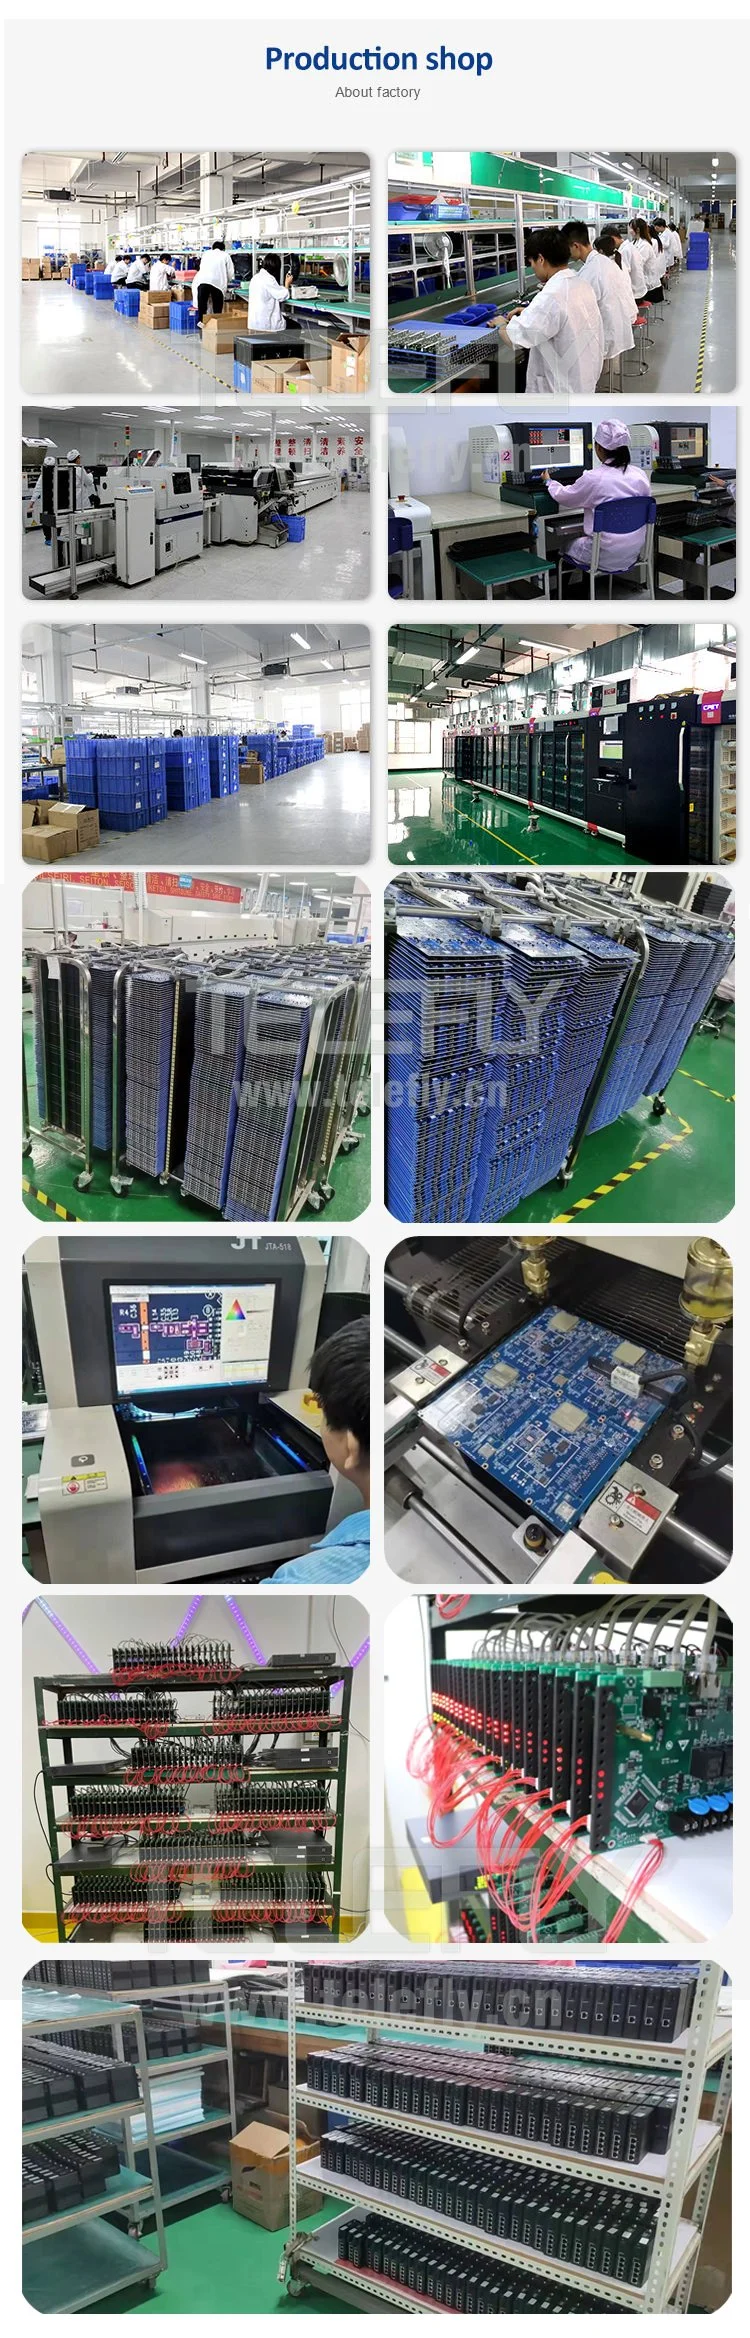 New Original IC Chips Infineon Tle92108232qxxuma1, Also Known as Tle92108-232qx, 28 V 100 Ma Non-Inverting Half-Bridge Gate Driver IC in Stock